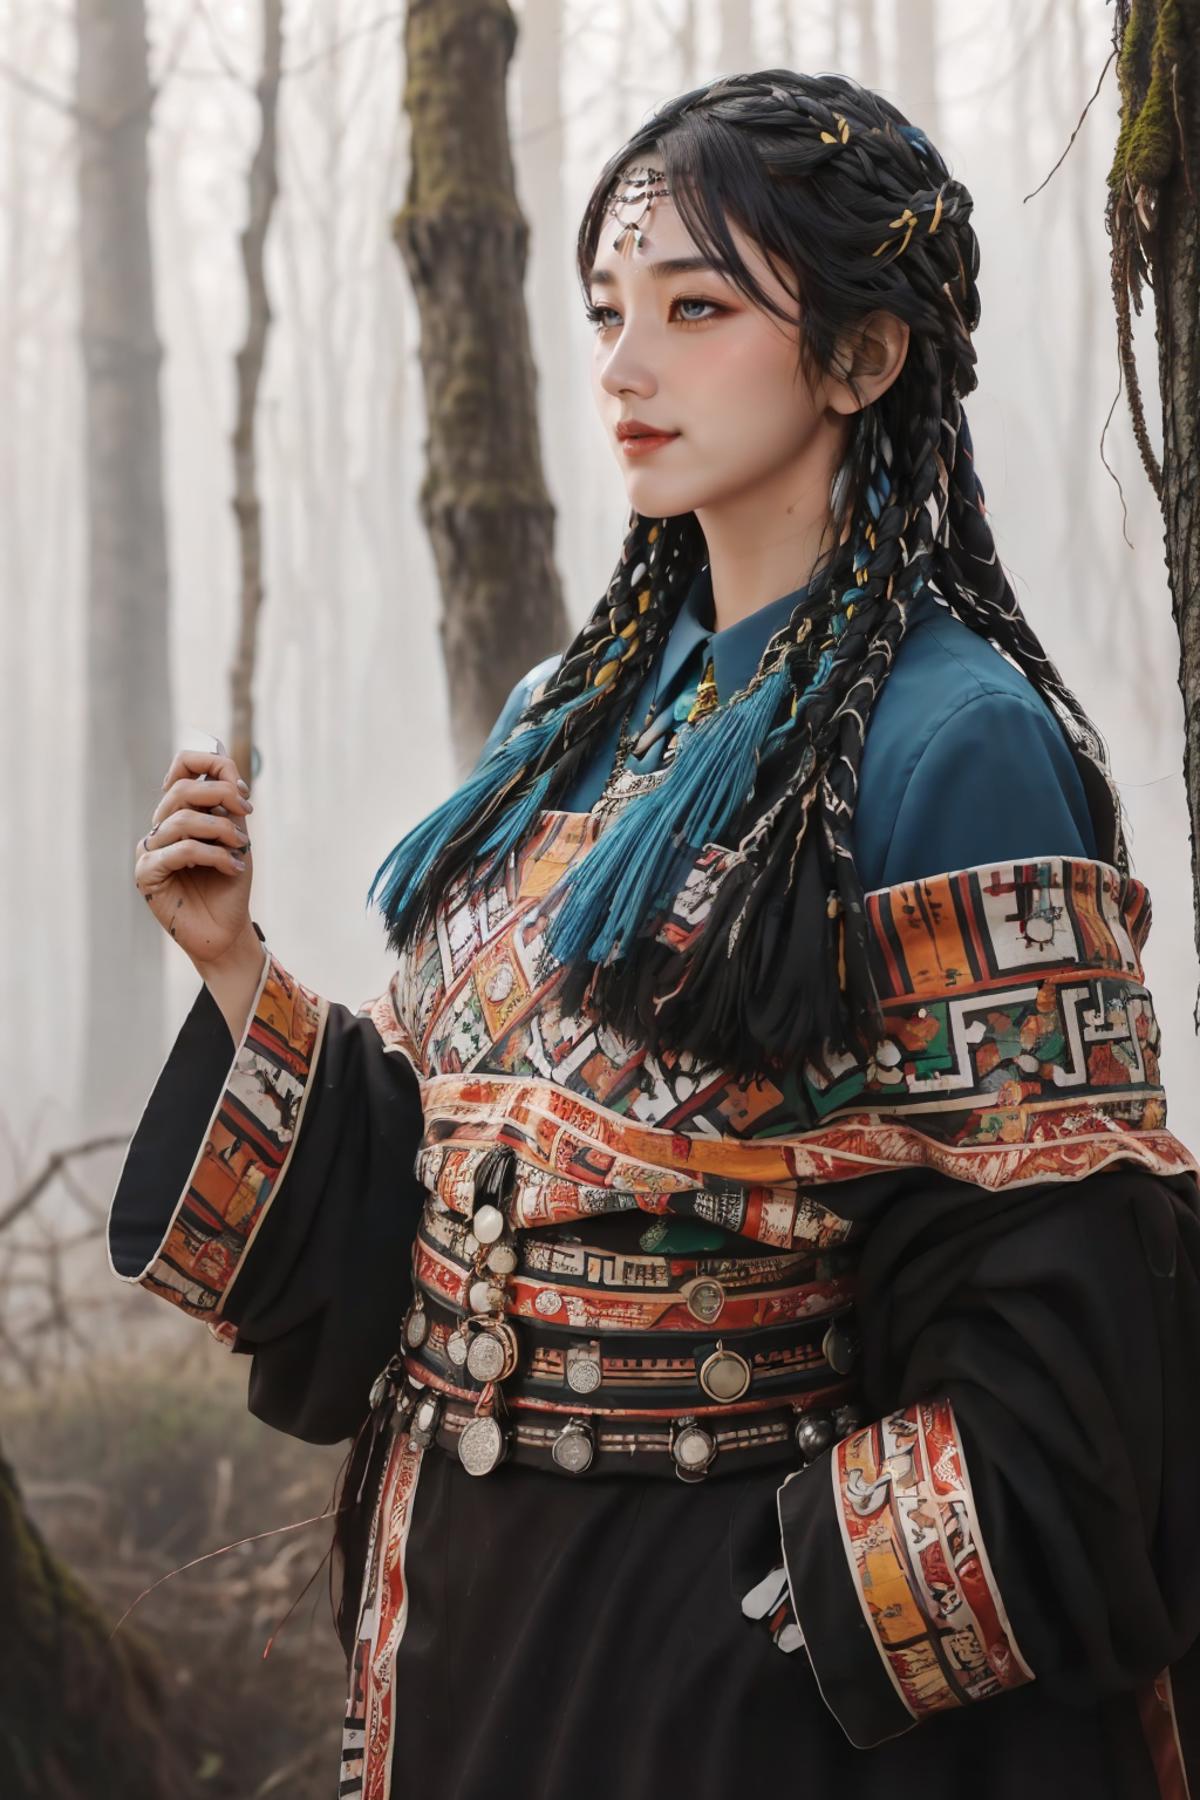 Tibetan clothing image by Darknoice